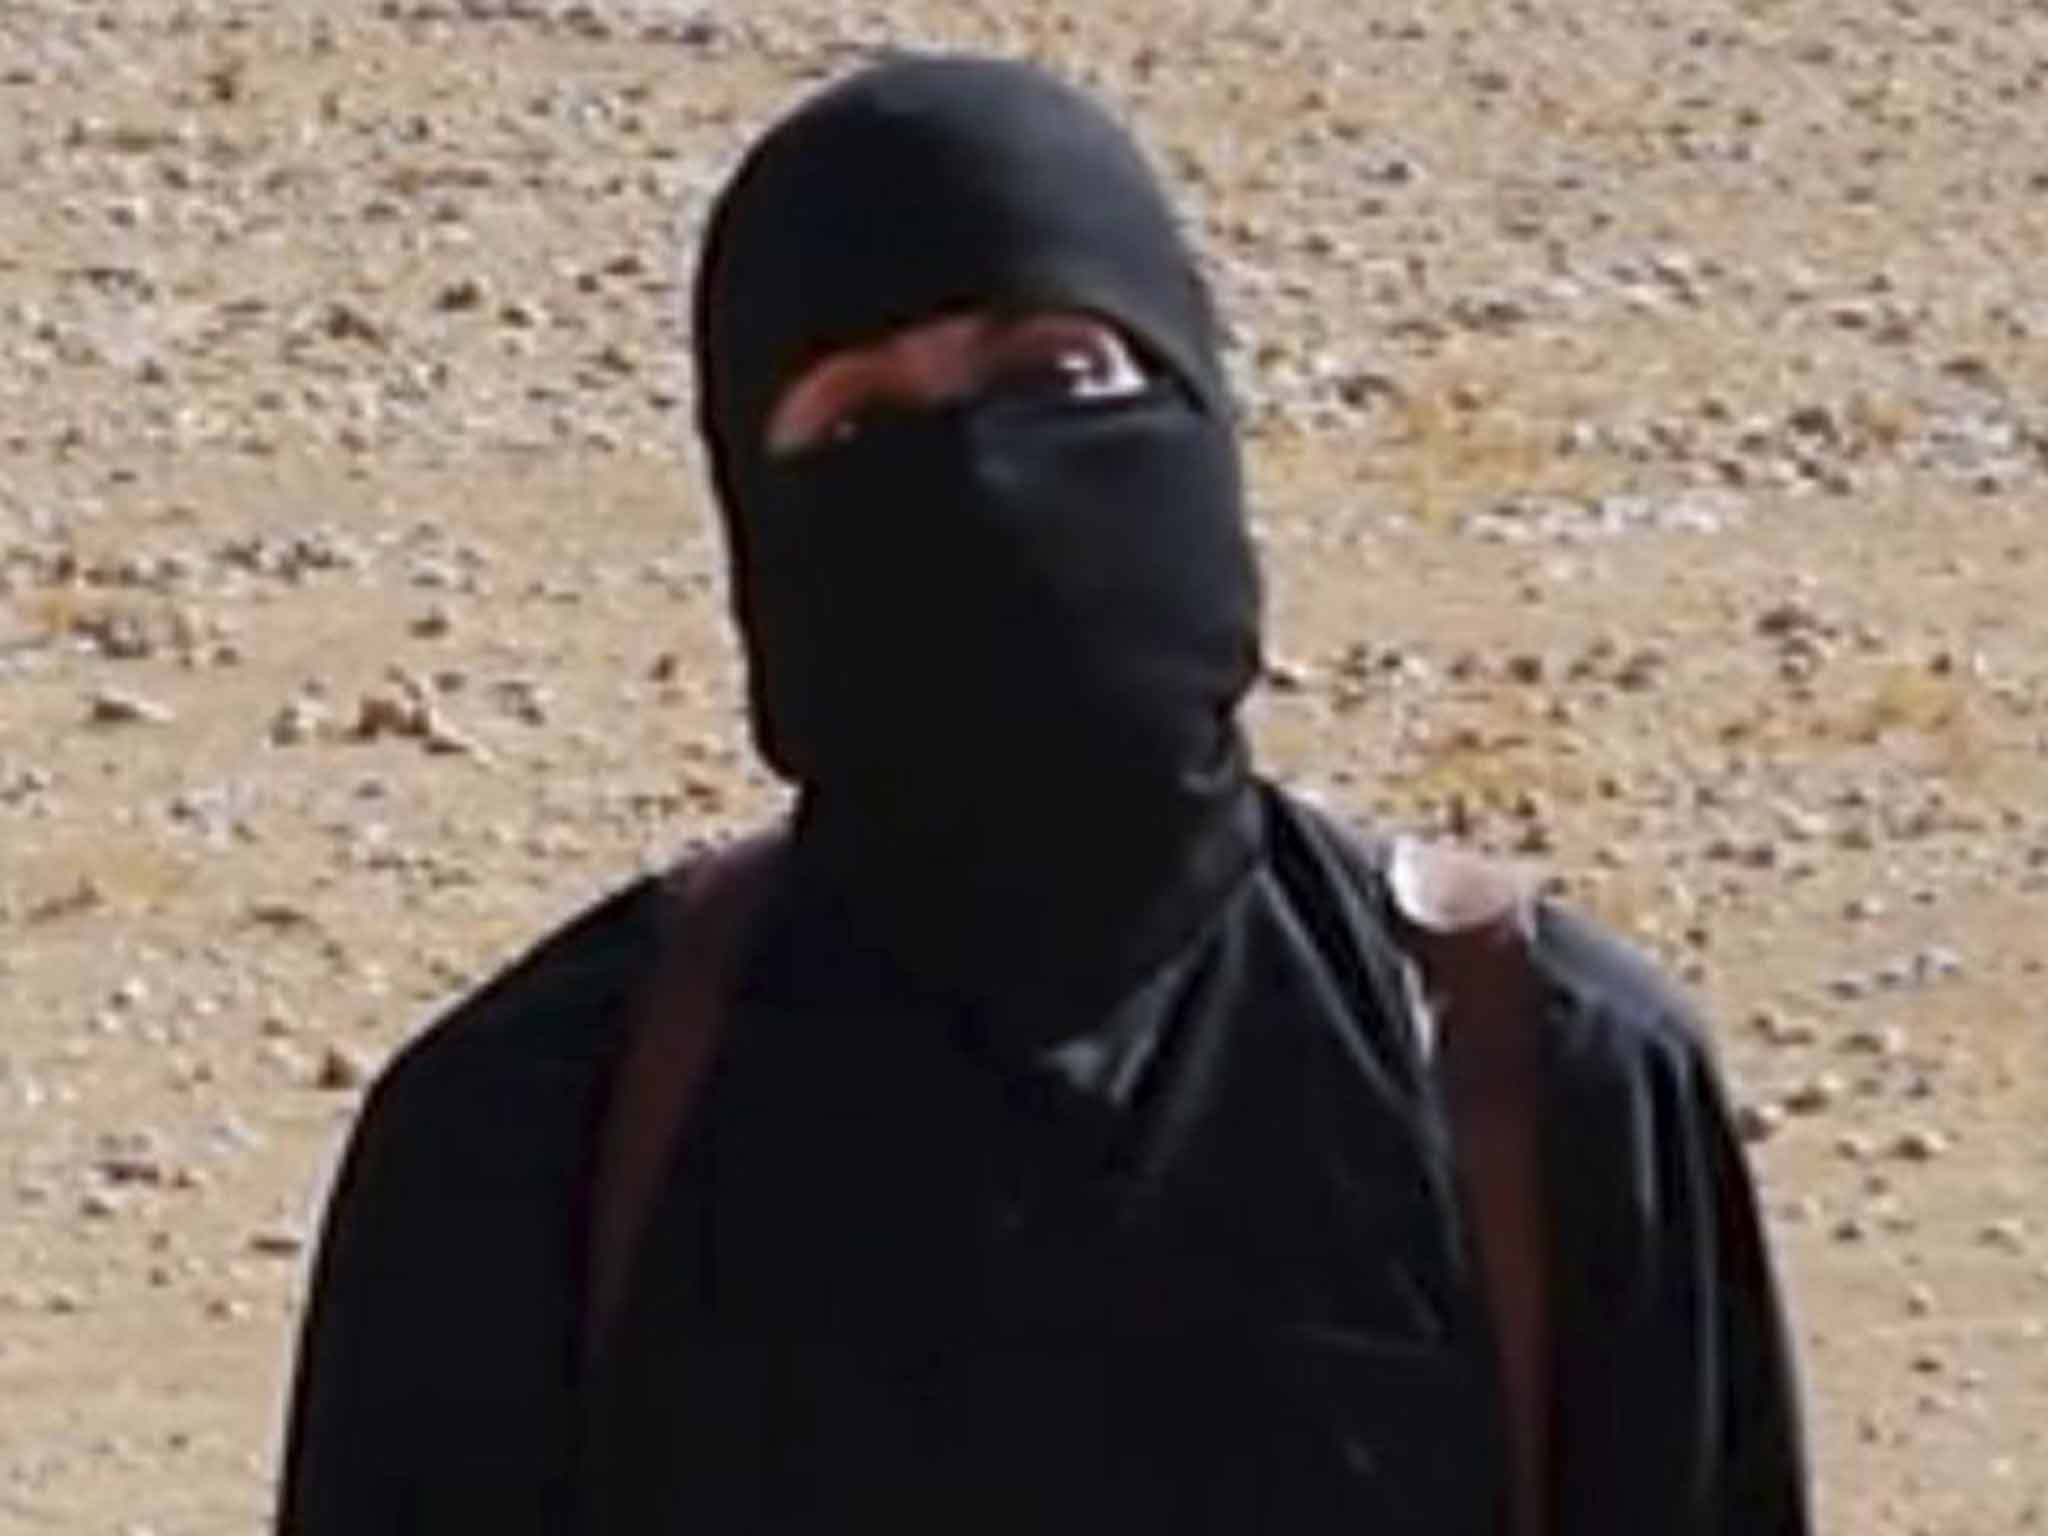 26-year-old 'Jihadi John' is believed to have left Britain in 2012-13